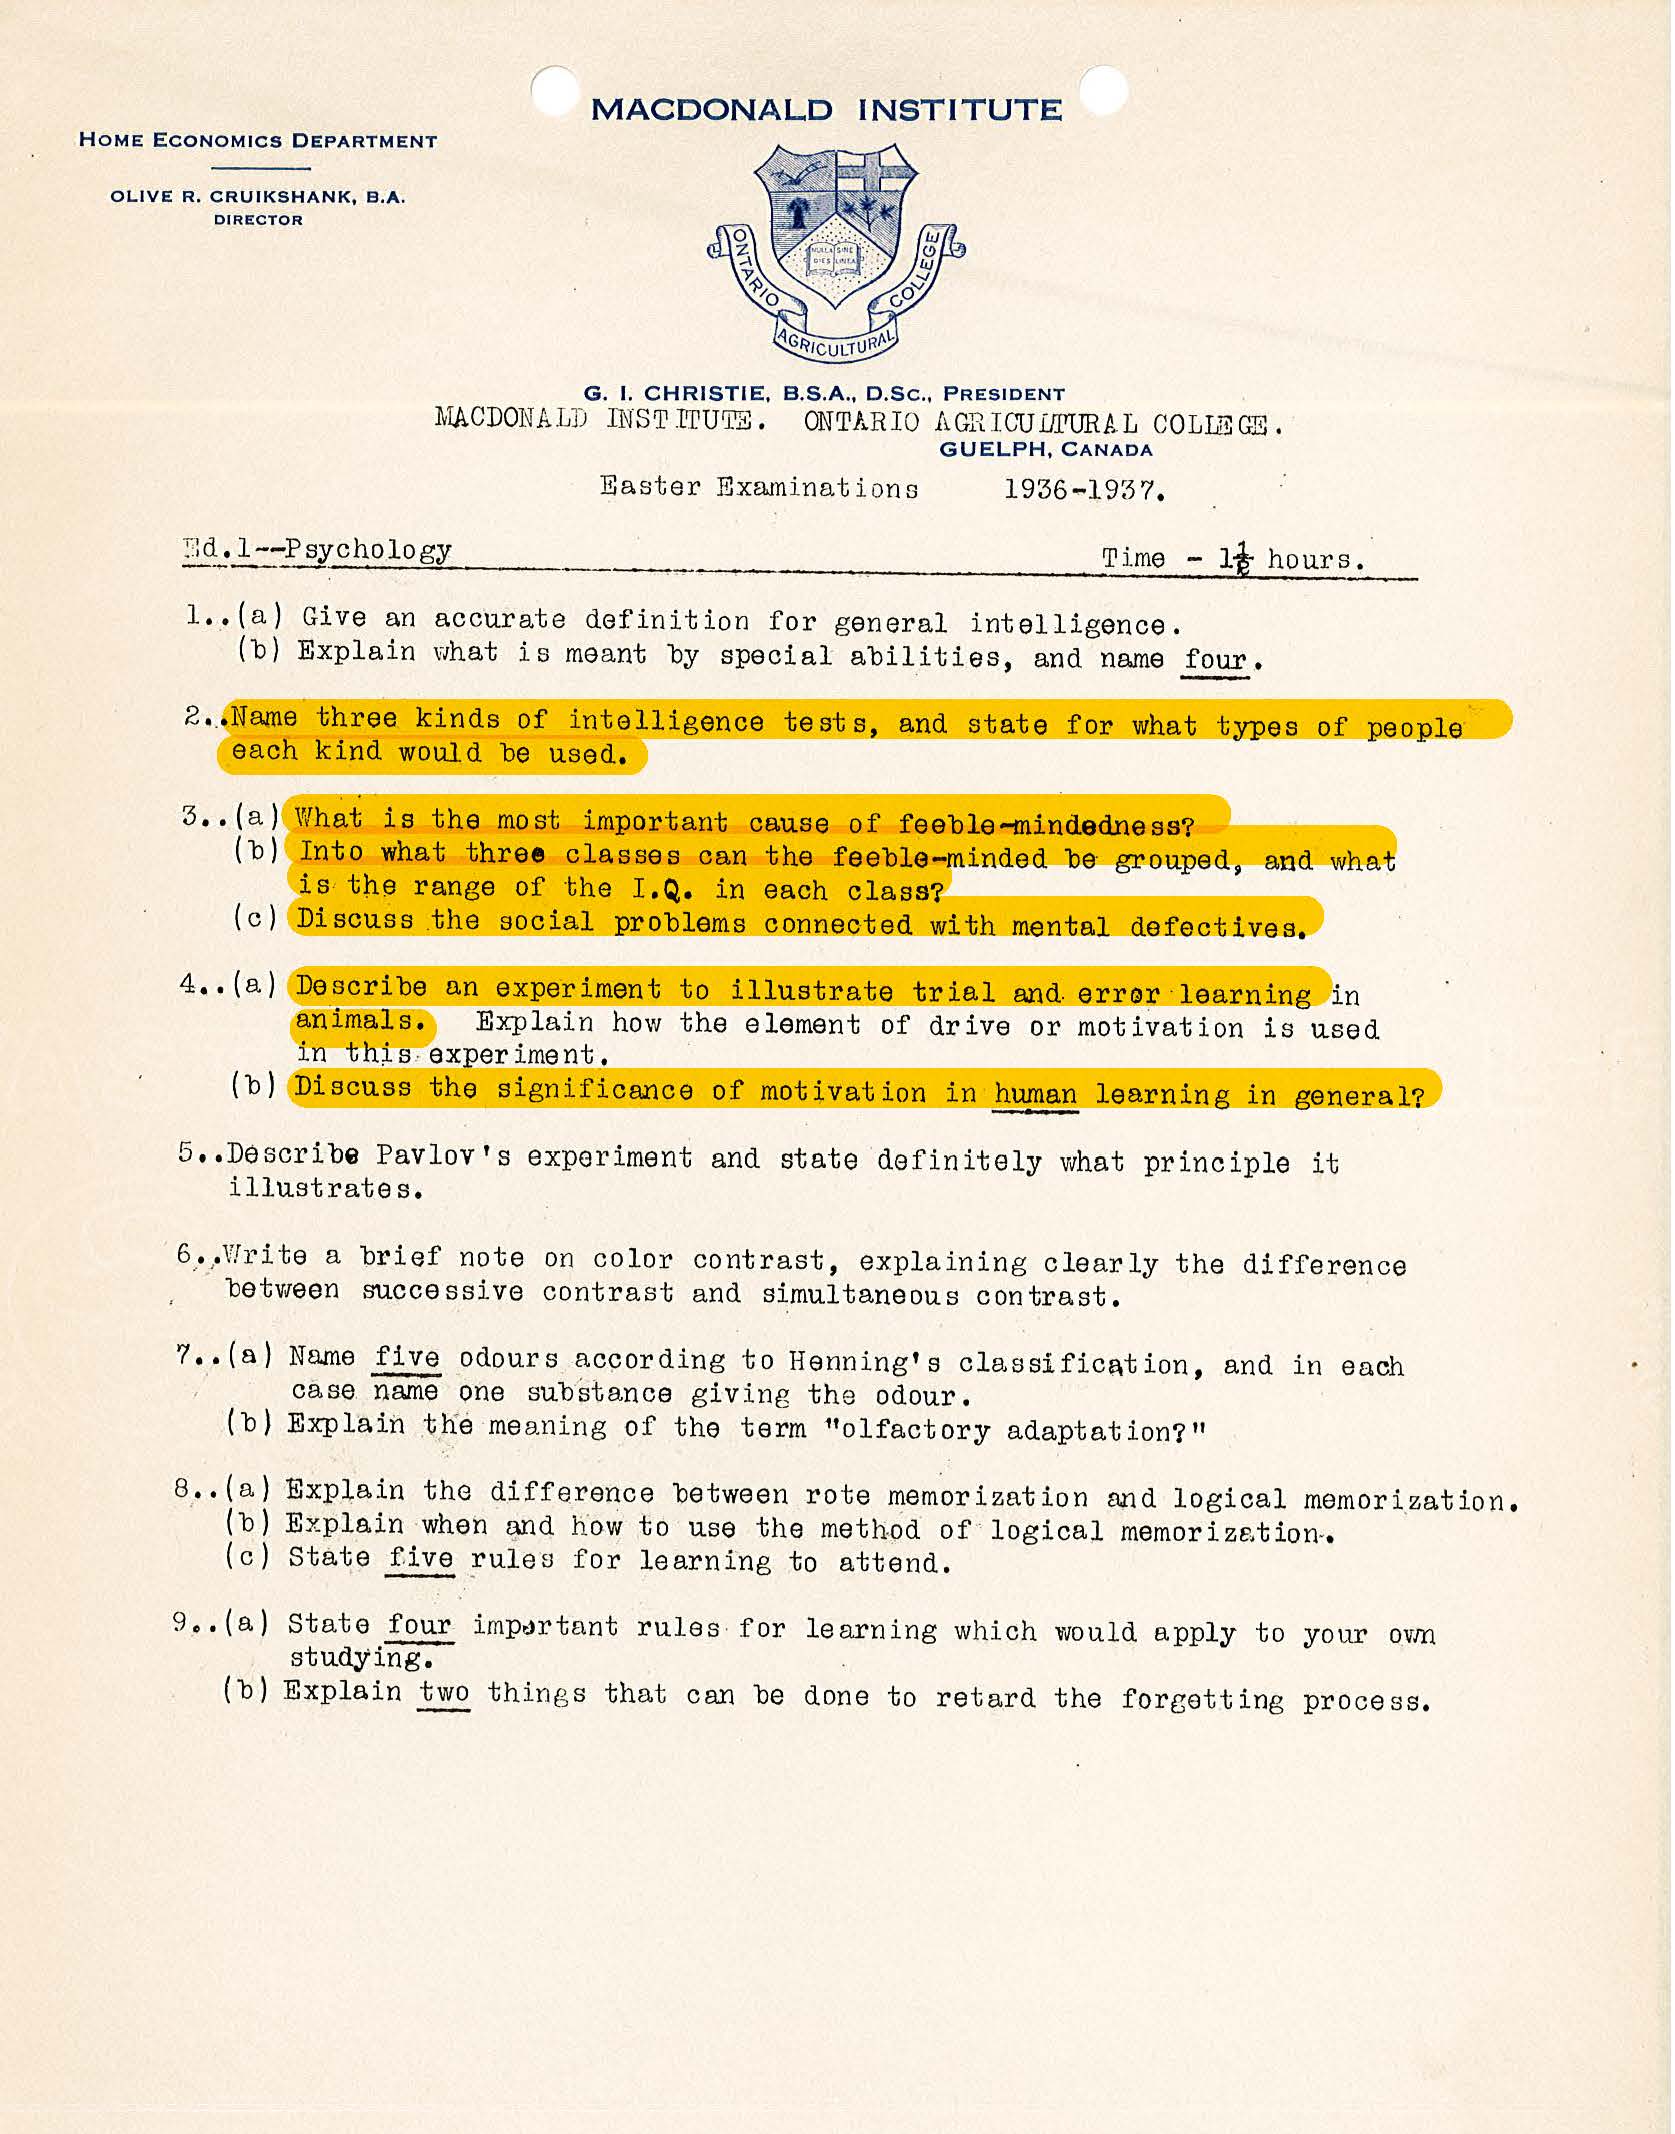 Macdonald Institute Psychology exam, 1936-1937. The exam is on eugenics and intelligence testing. 